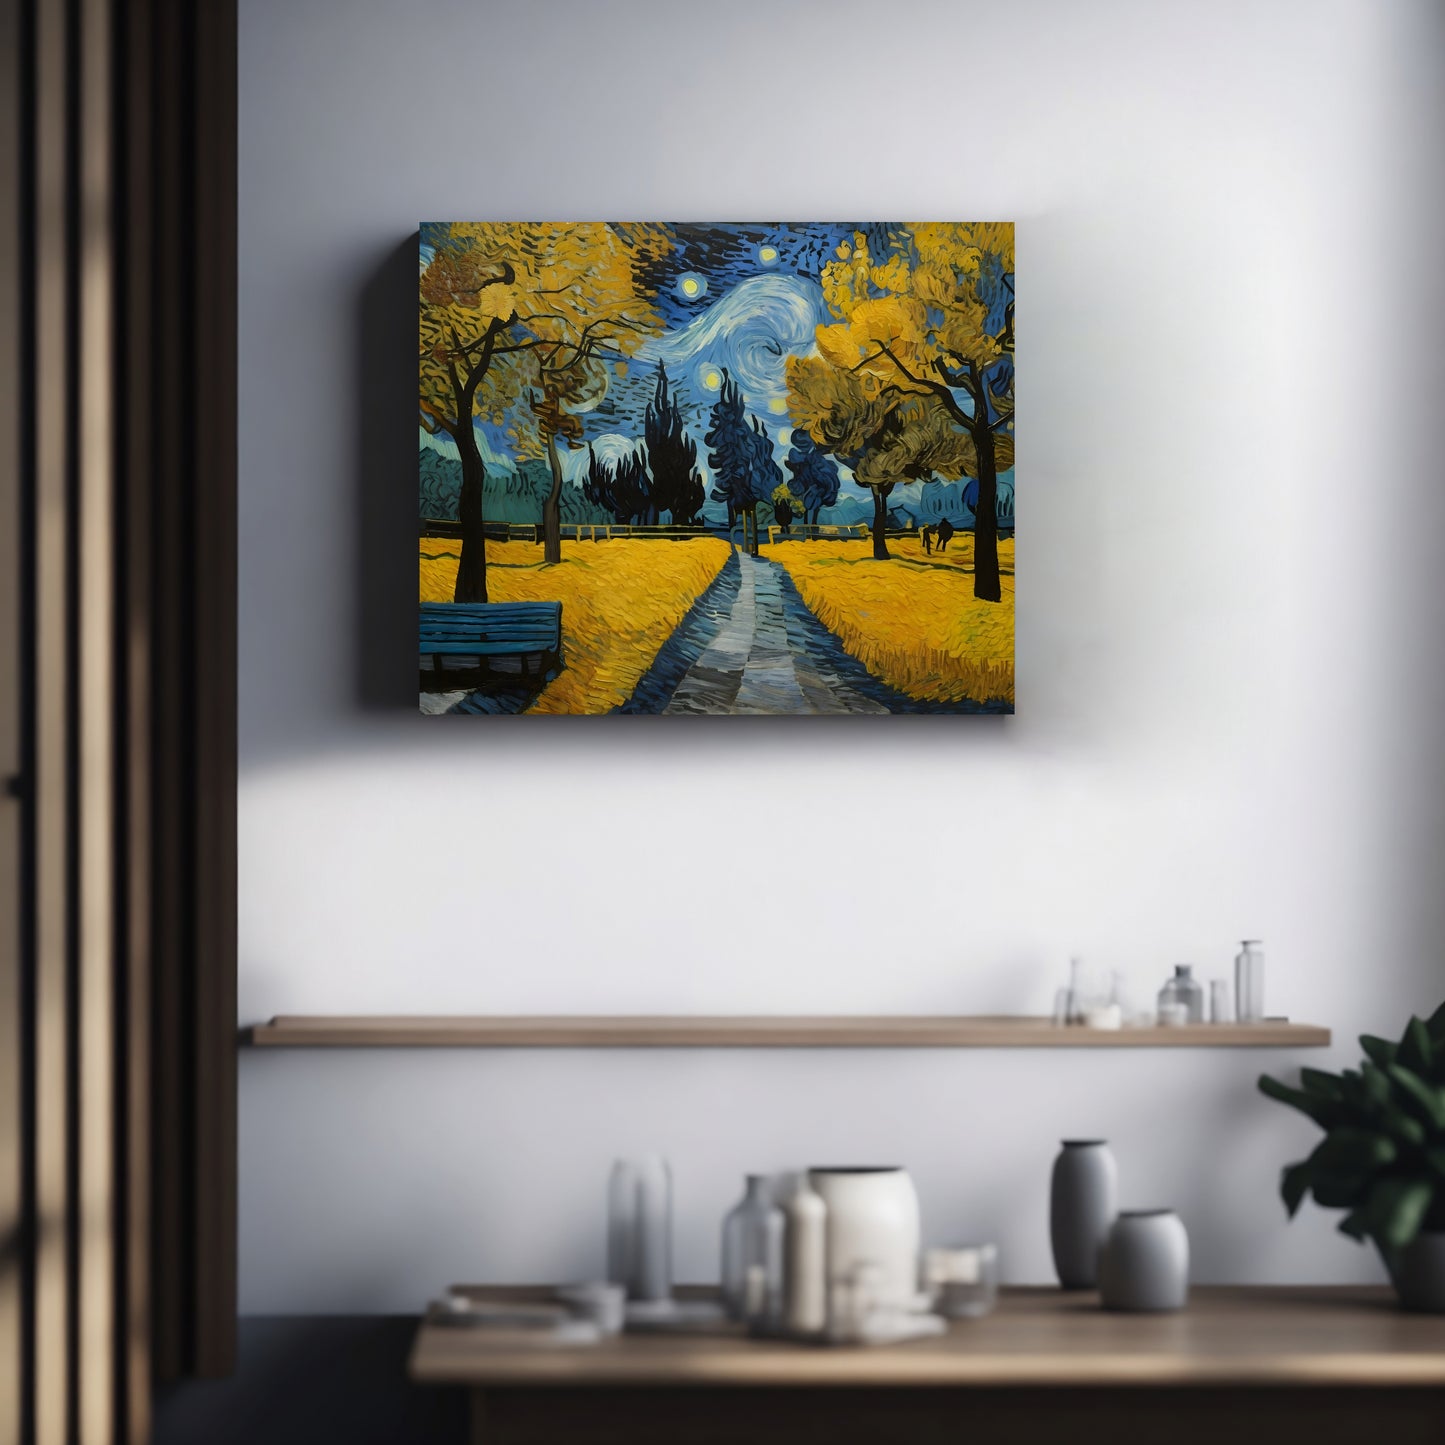 The Night Park - van Gogh Inspiration